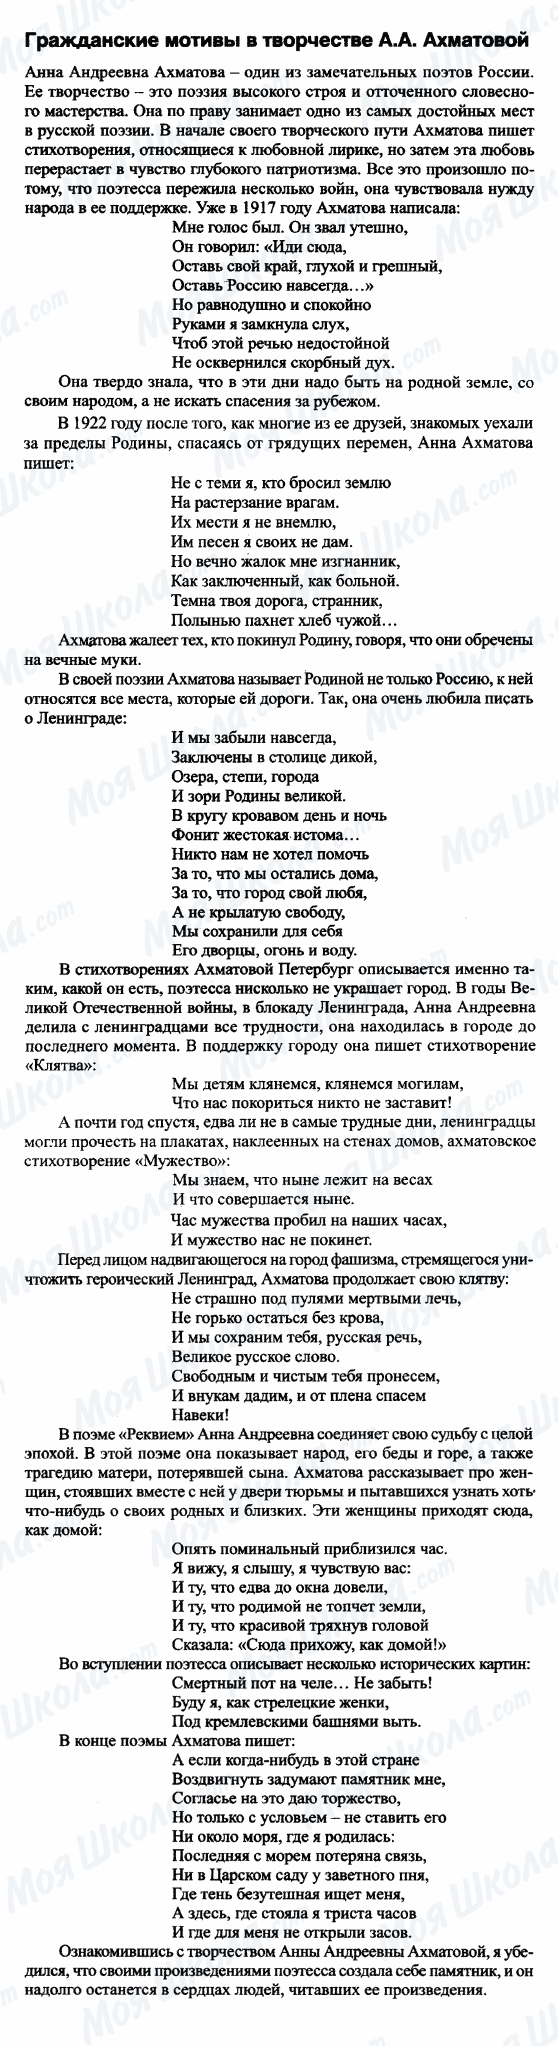 ГДЗ Російська література 9 клас сторінка Гражданские мотивы в творчестве А.А. Ахиатовой